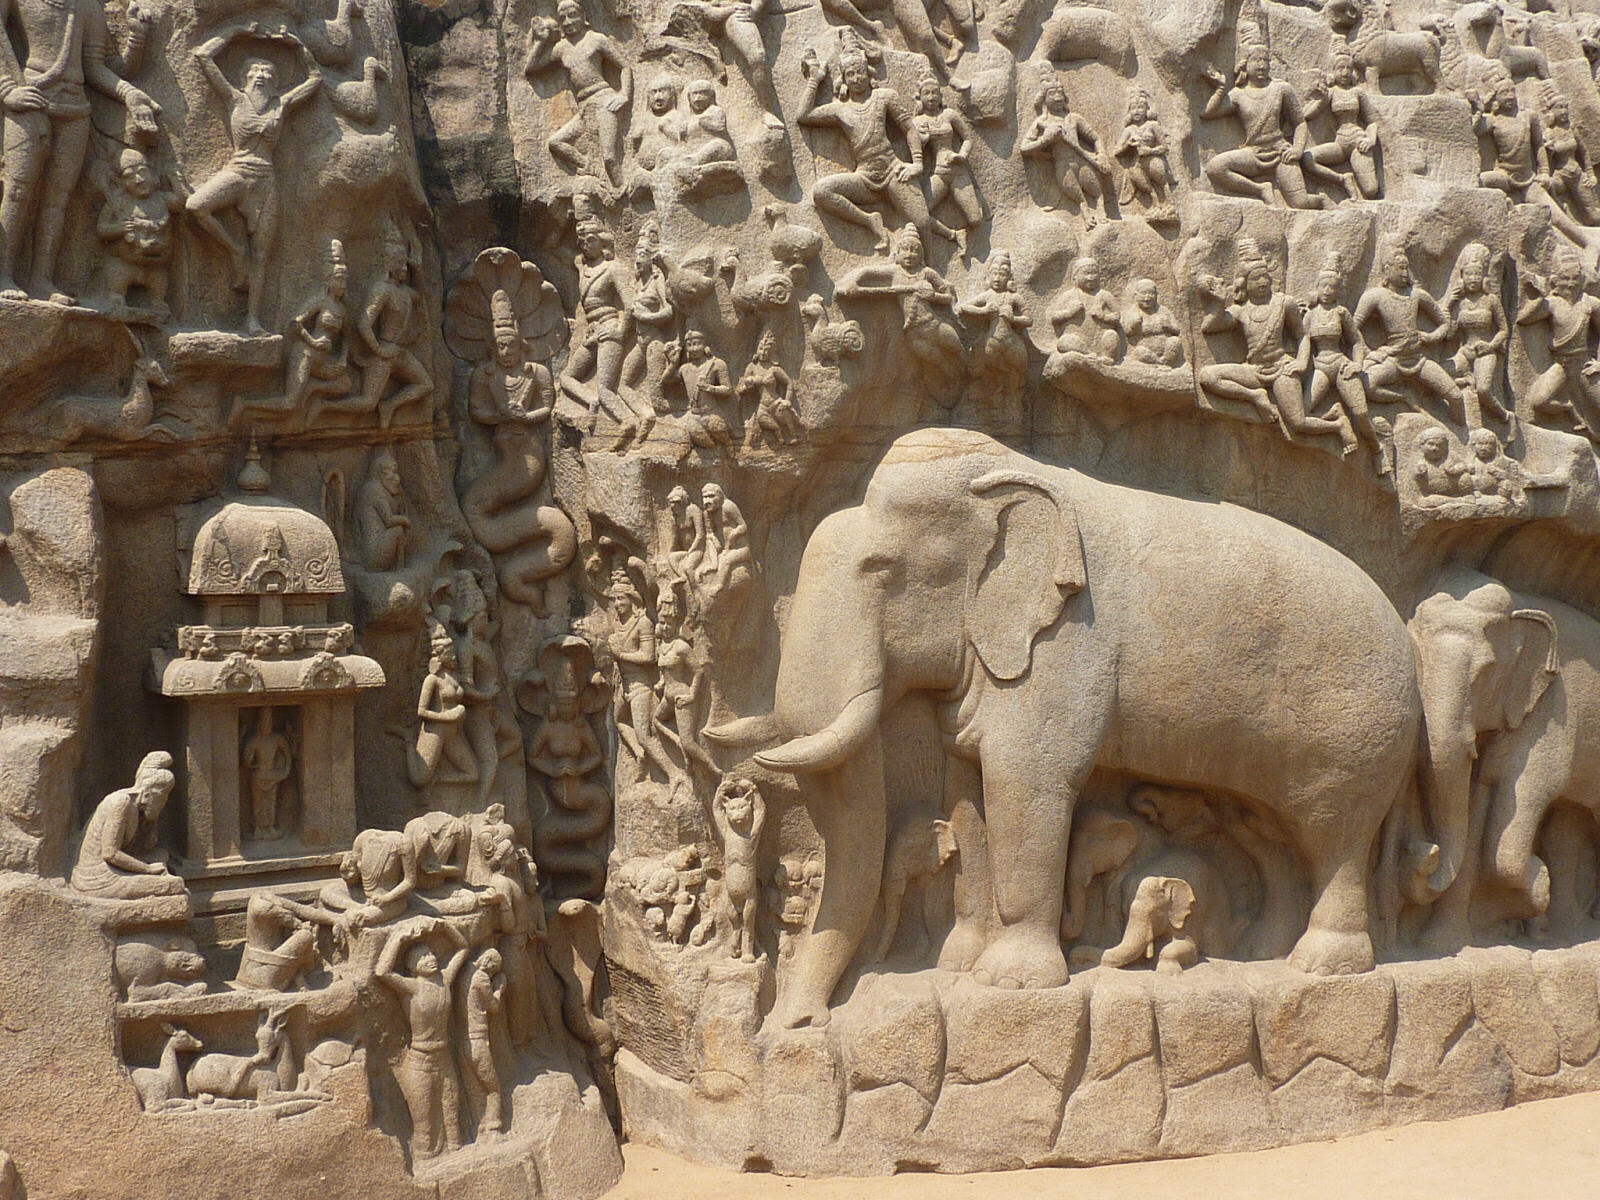 Anjuna's Penance sculpture in Mamallapuram, India